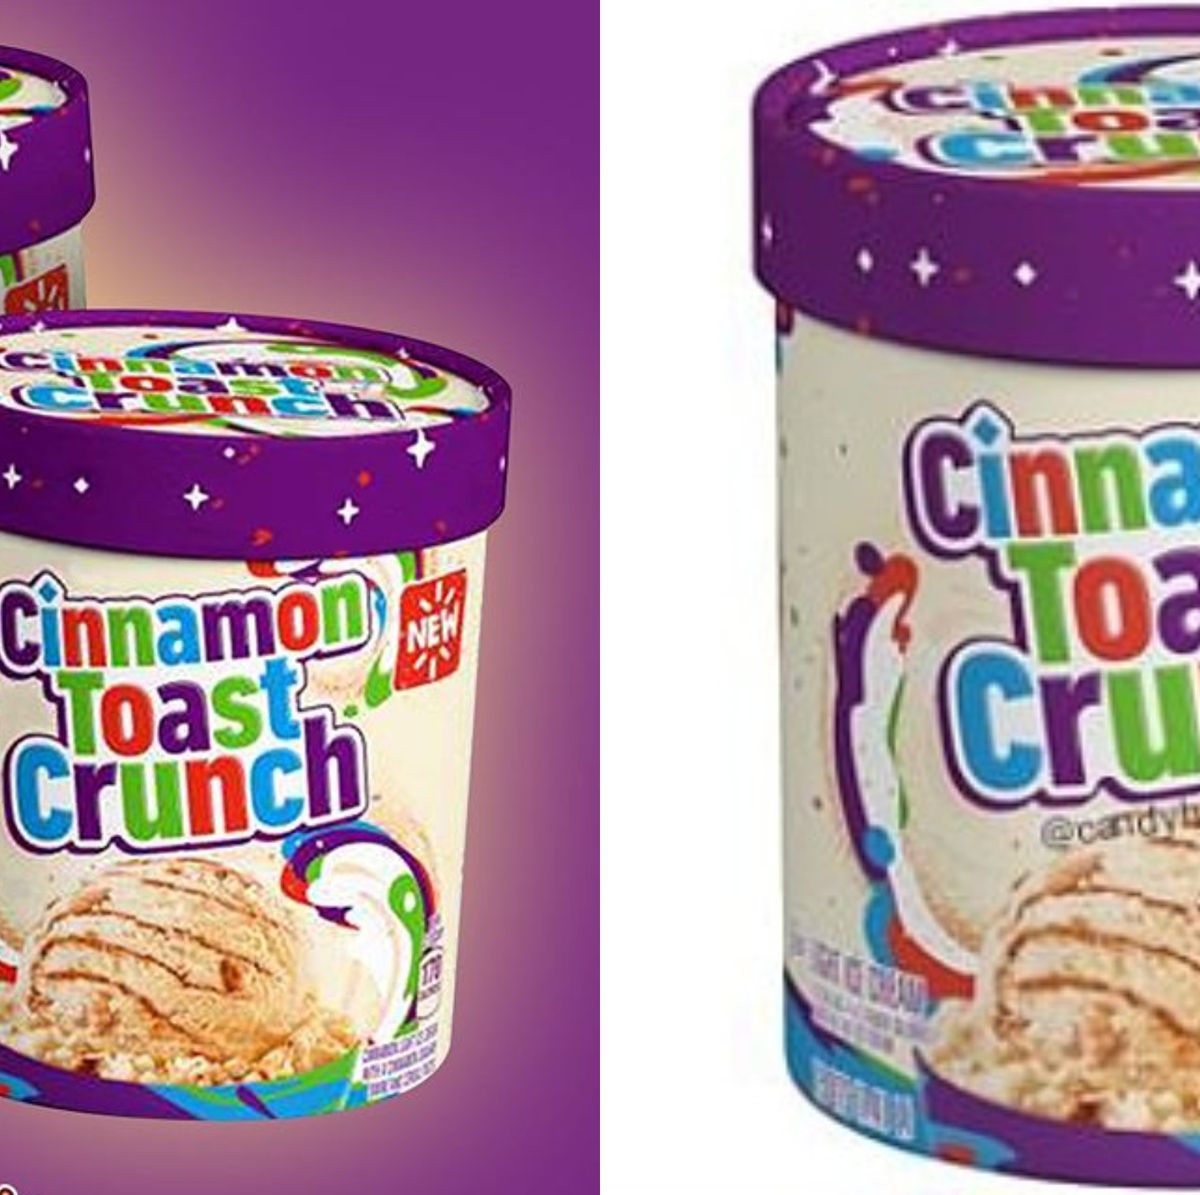 It's ice cream season and this Cinnamon Toast Crunch ice cream is